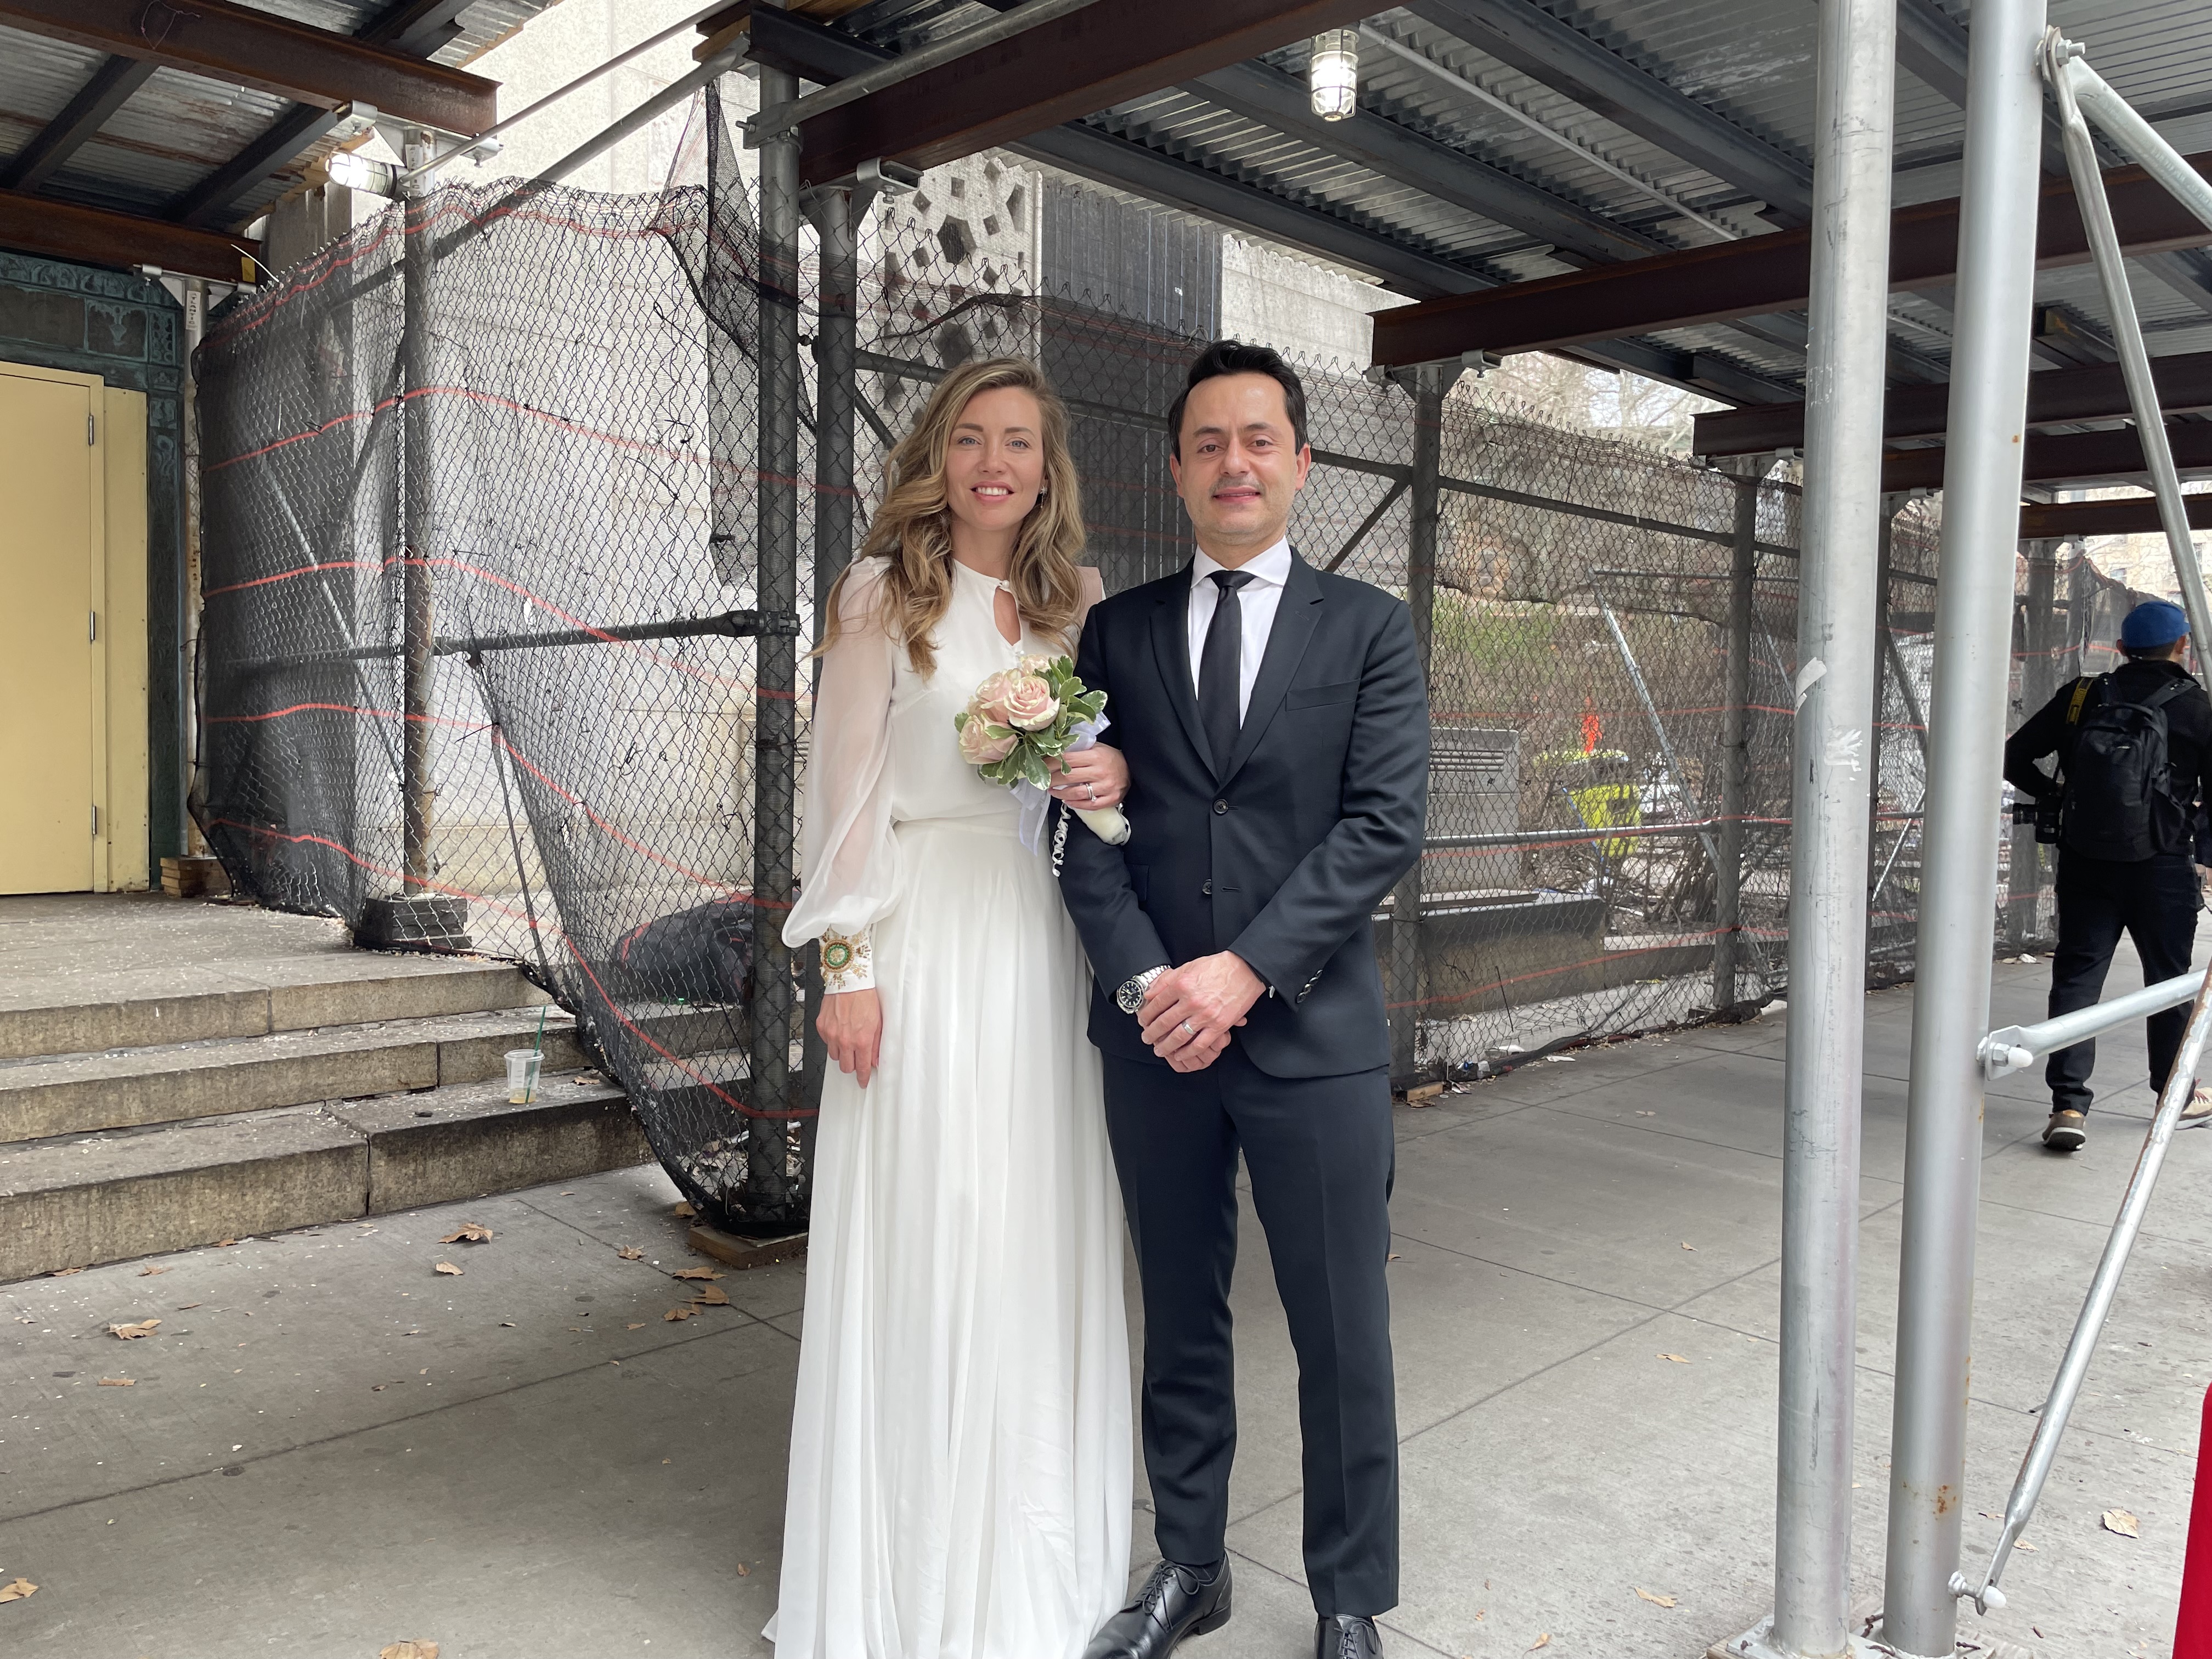 Newlyweds Carlos Giraldo and Galina Rusnak got married around the corner from where former President Donald Trump's arraignment took place in Lower Manhattan.